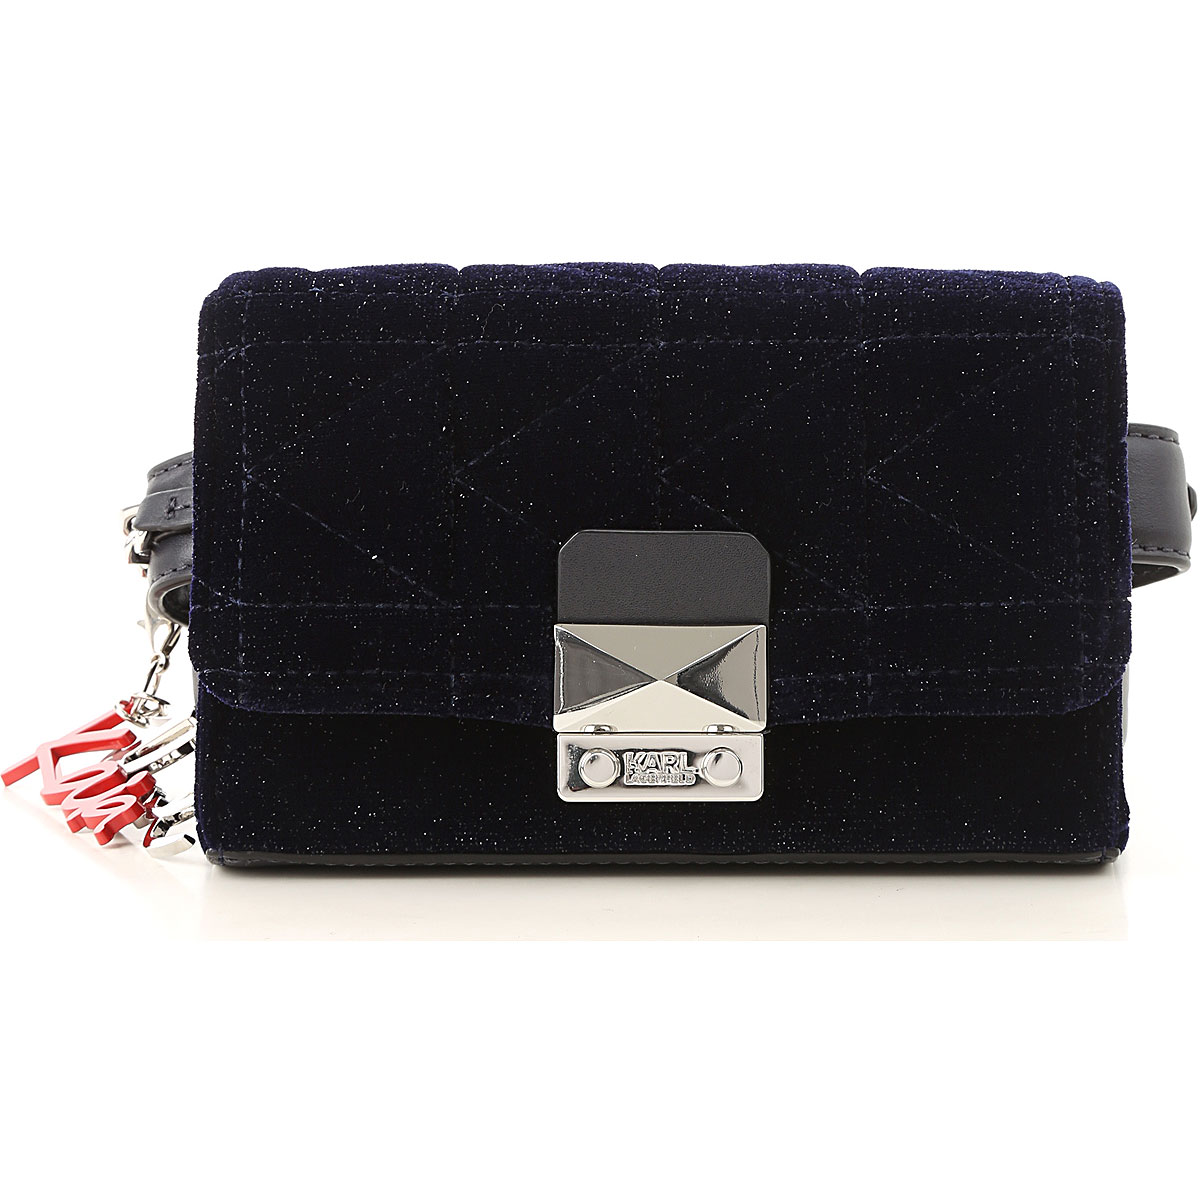 Handbags Karl Lagerfeld, Style code: 86kw3092-navy-